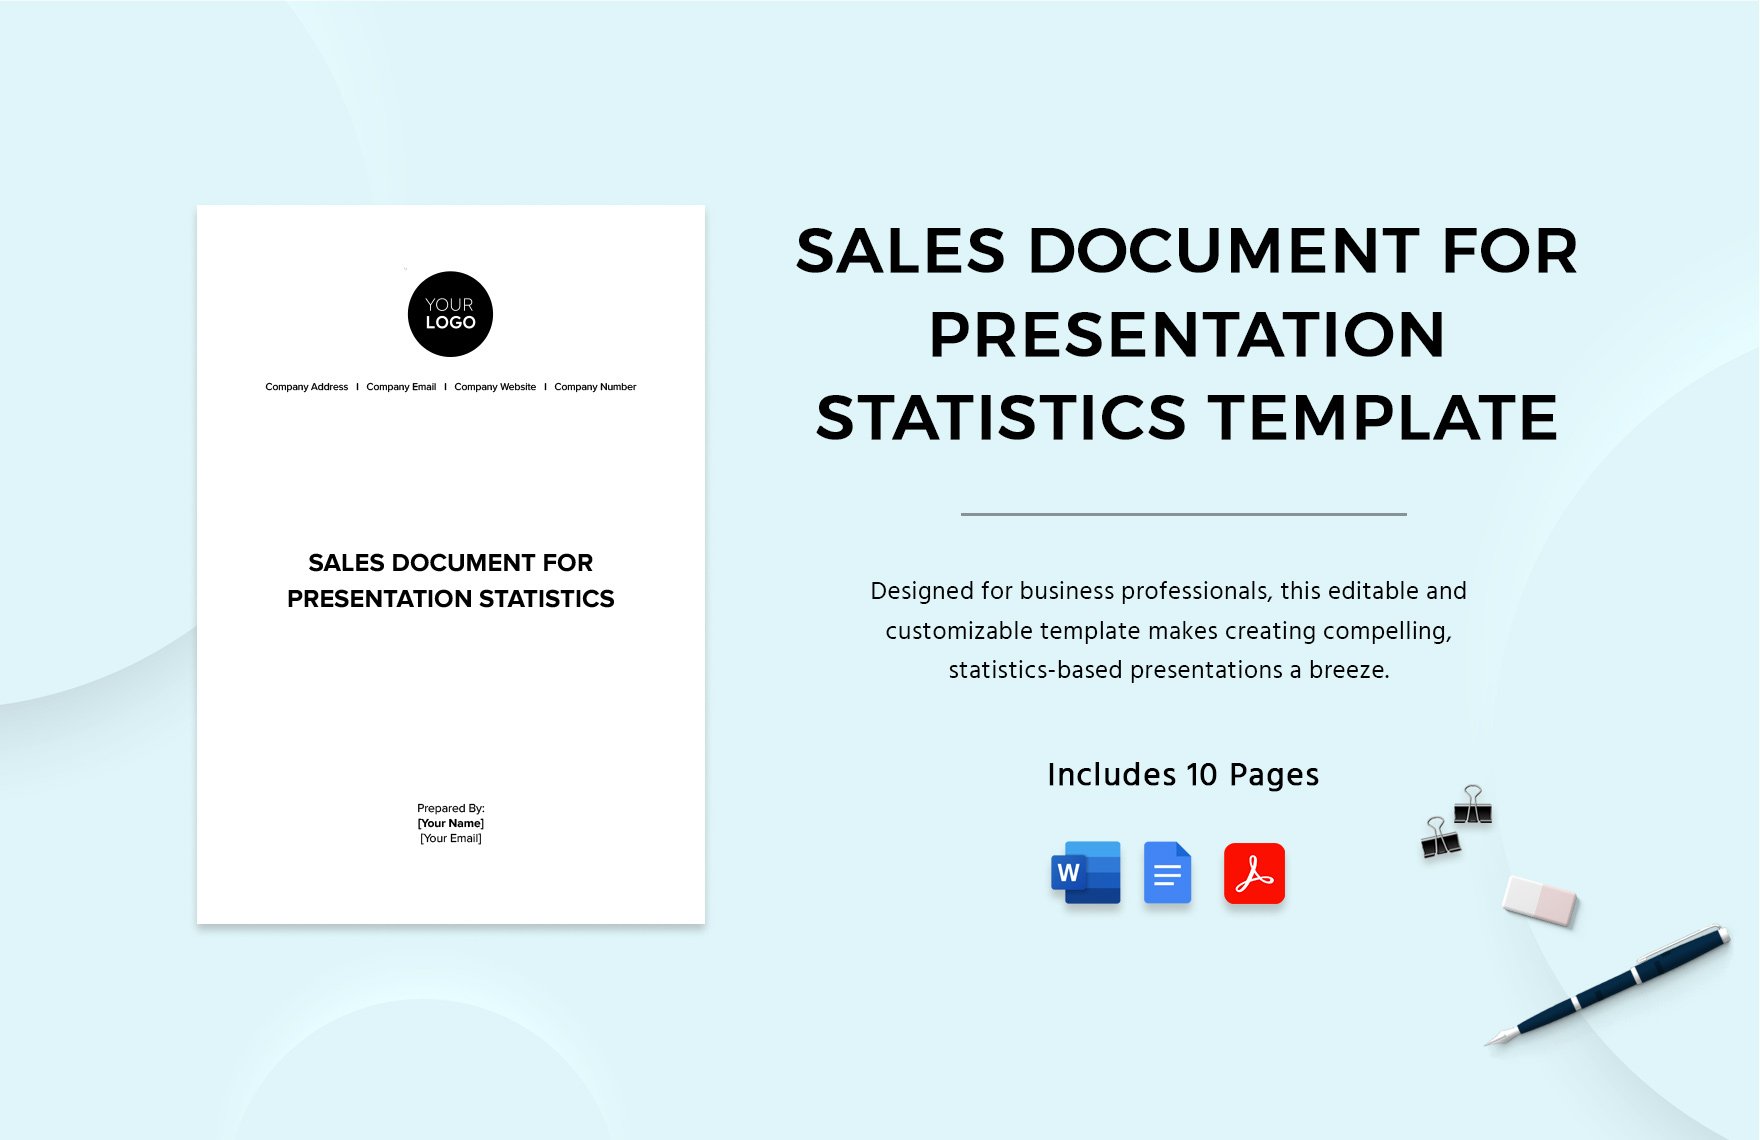 Sales Document for Presentation Statistics Template